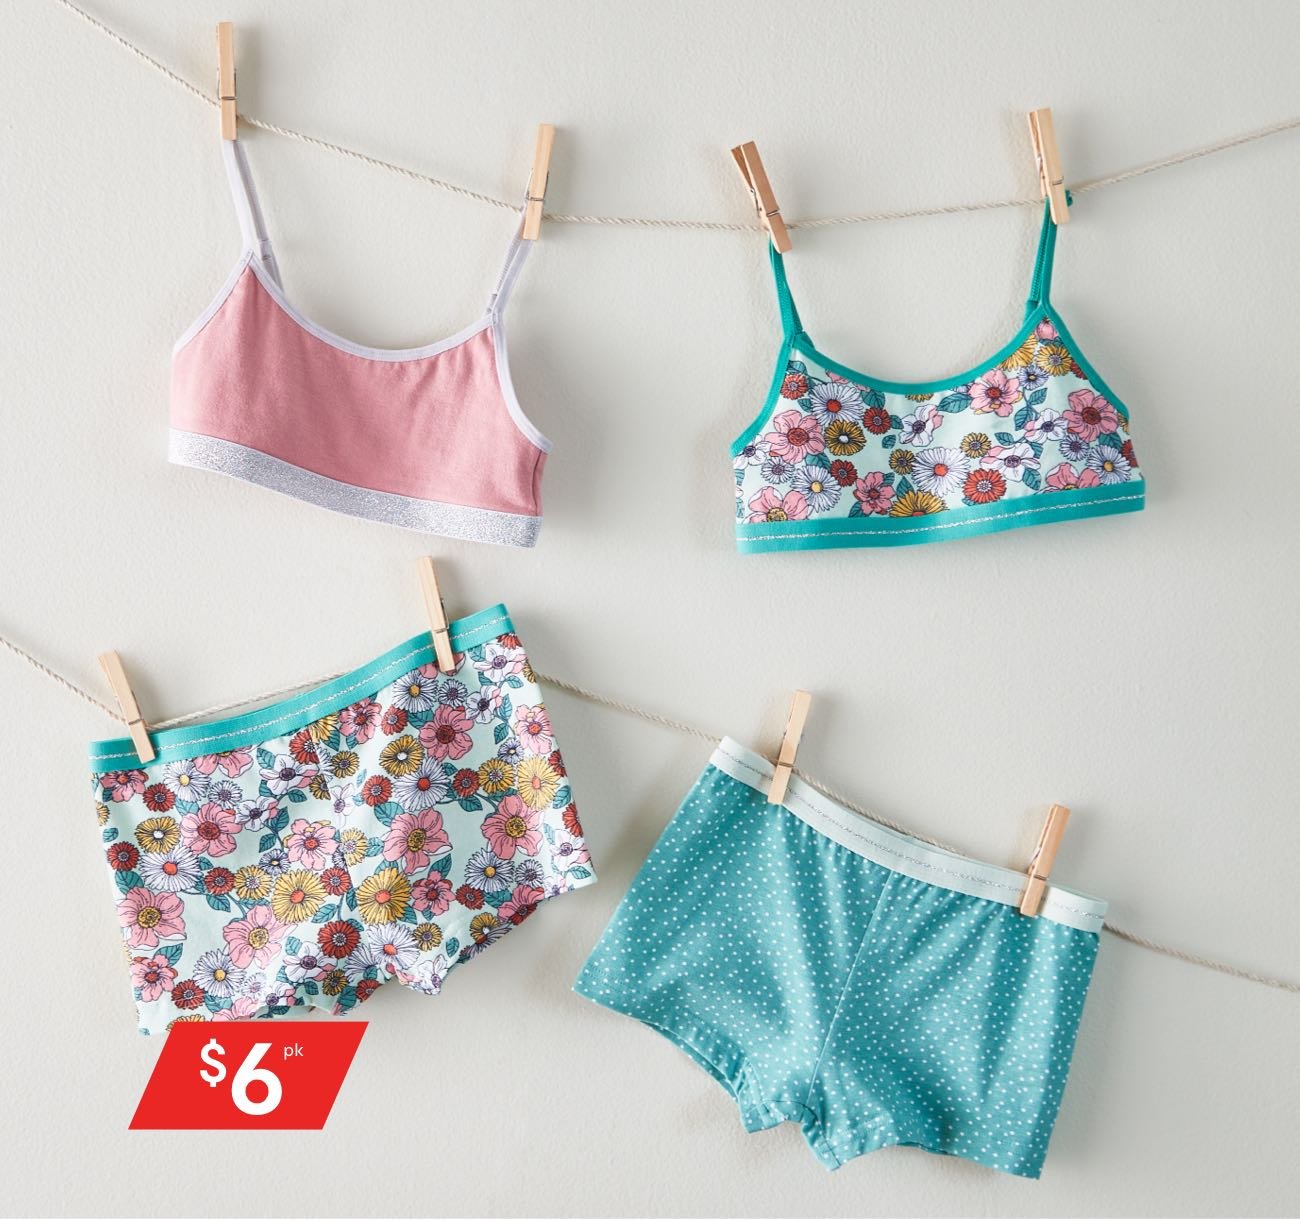 Kmart Australia: Today's top pick! Easy-to-wear underwear.